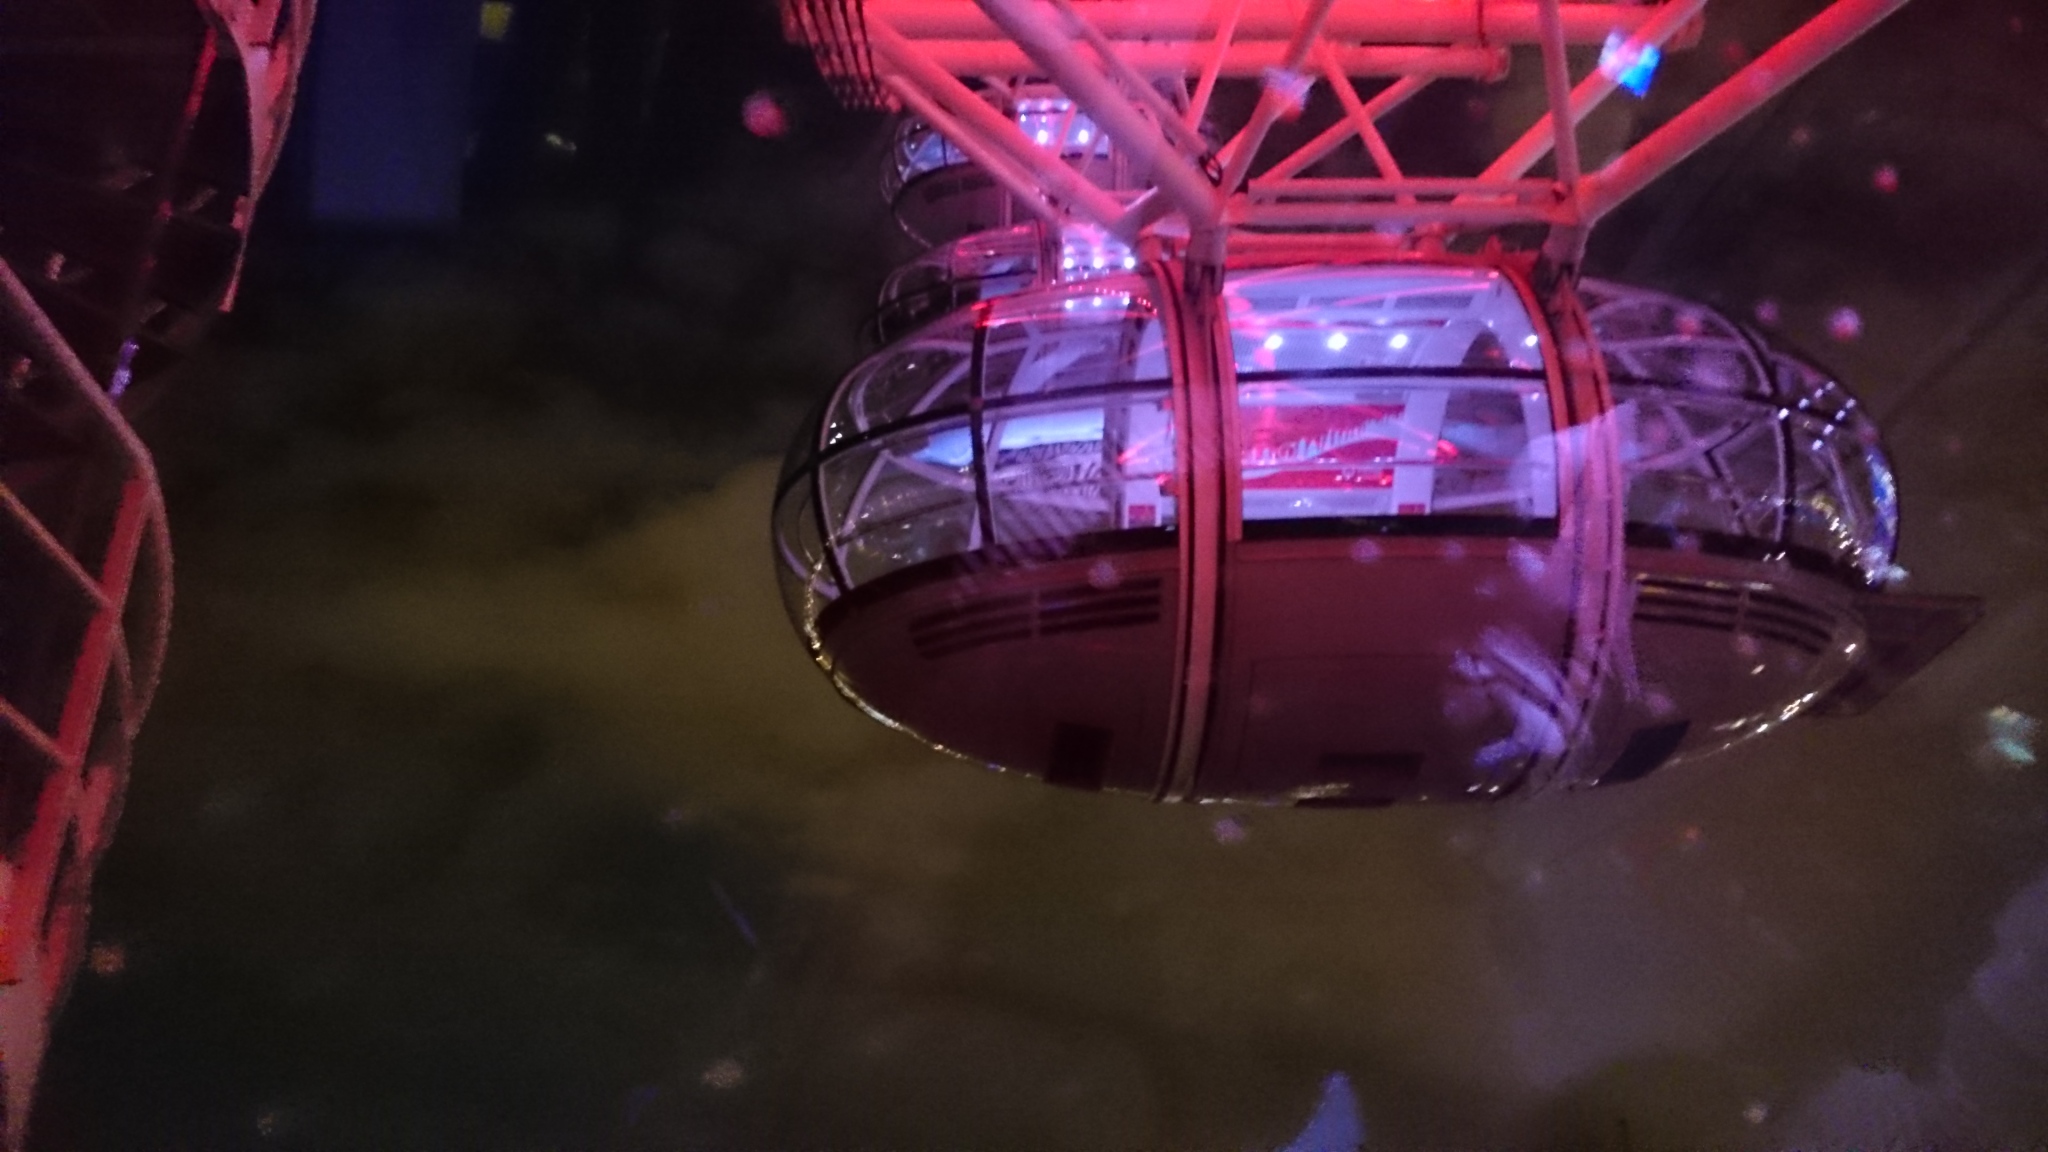 dsc 0776 - Una subida al London Eye de noche